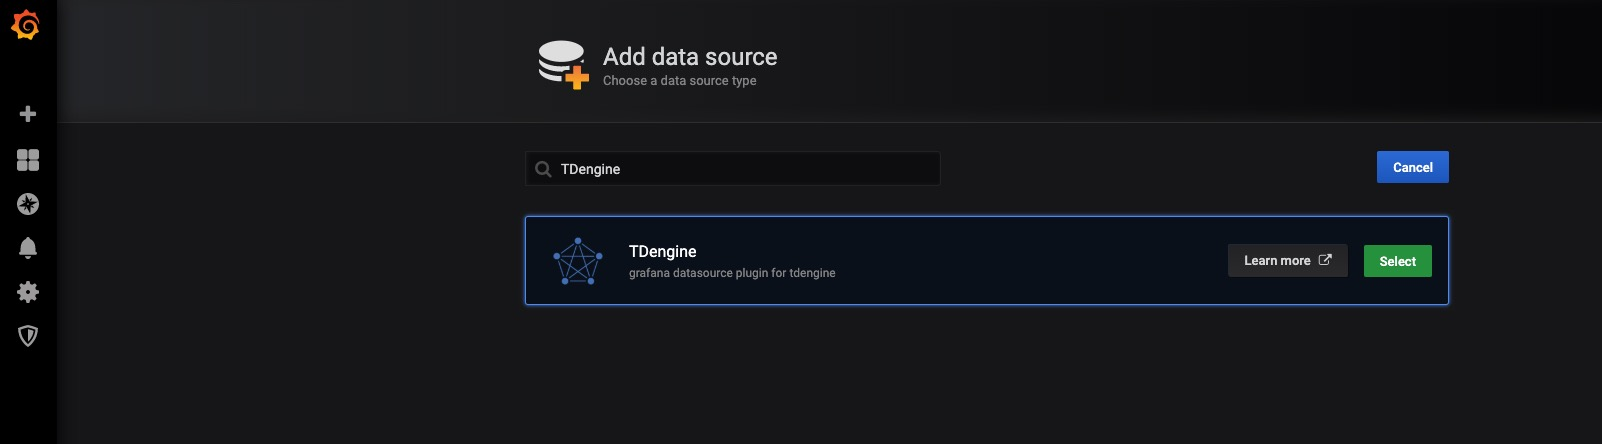 TDengine Database Grafana plugin add data source